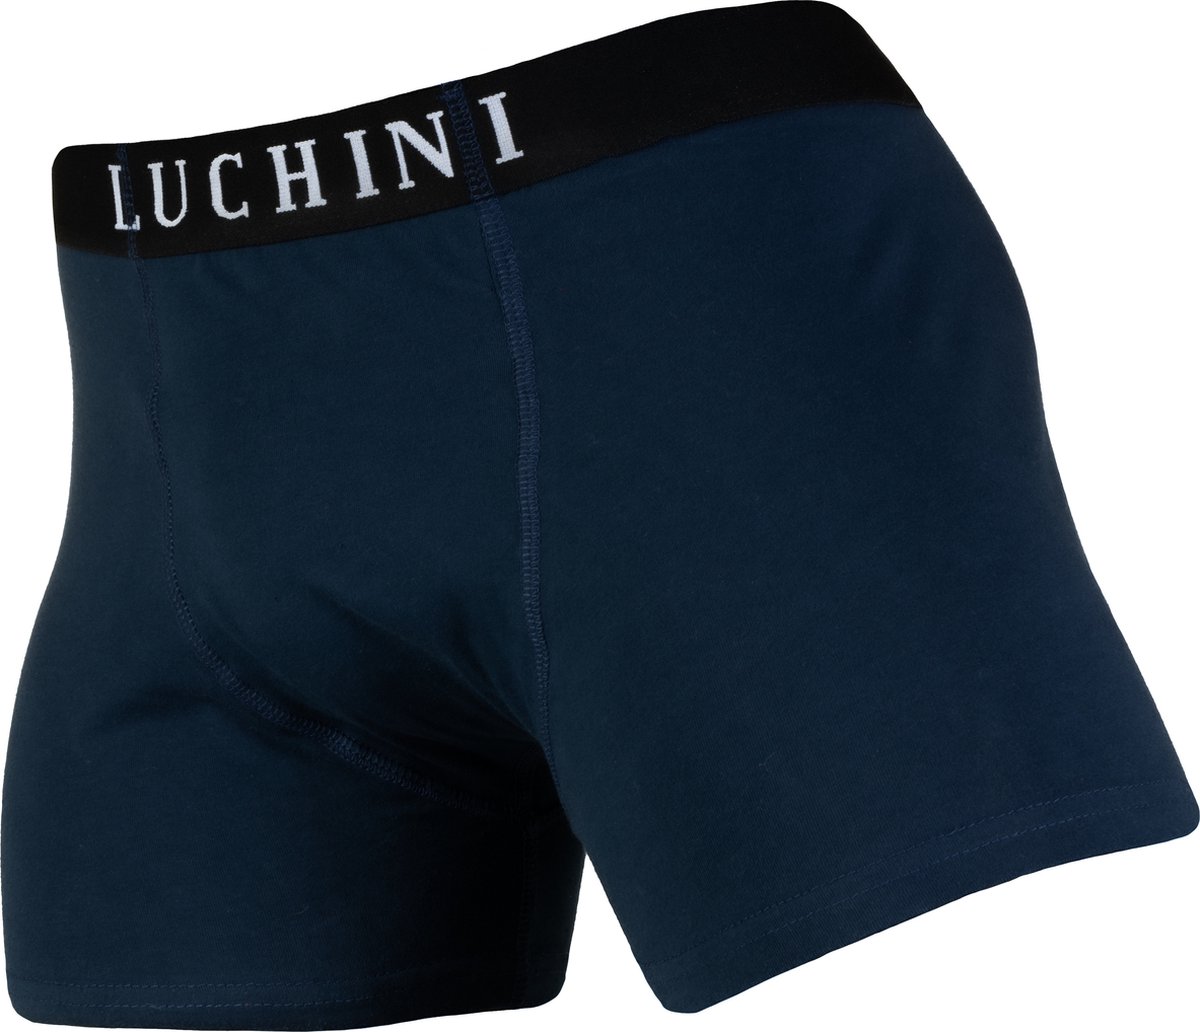 Luchini Clothing ® - LC Classic Maat M - Premium Boxershort heren - Heren Privacy Boxers met verborgen vak - 2-PACK boxershorts - Stealth boxers - Blauw